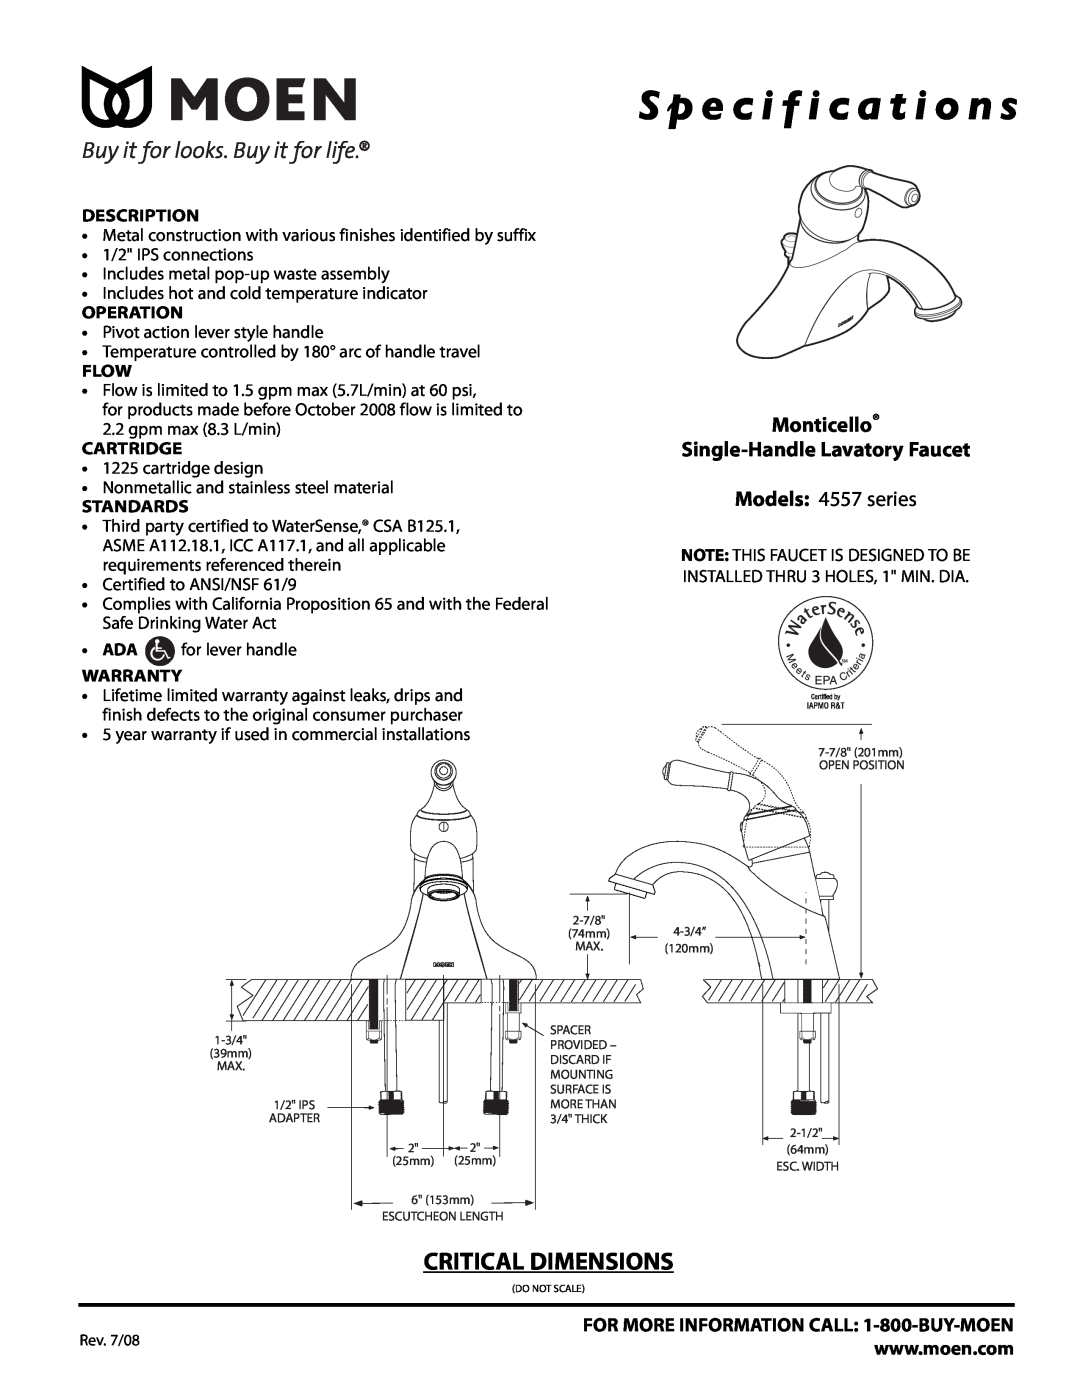 Moen 4557 Series specifications S p e c i f i c a t i o n s, Critical Dimensions, Monticello Single-Handle Lavatory Faucet 